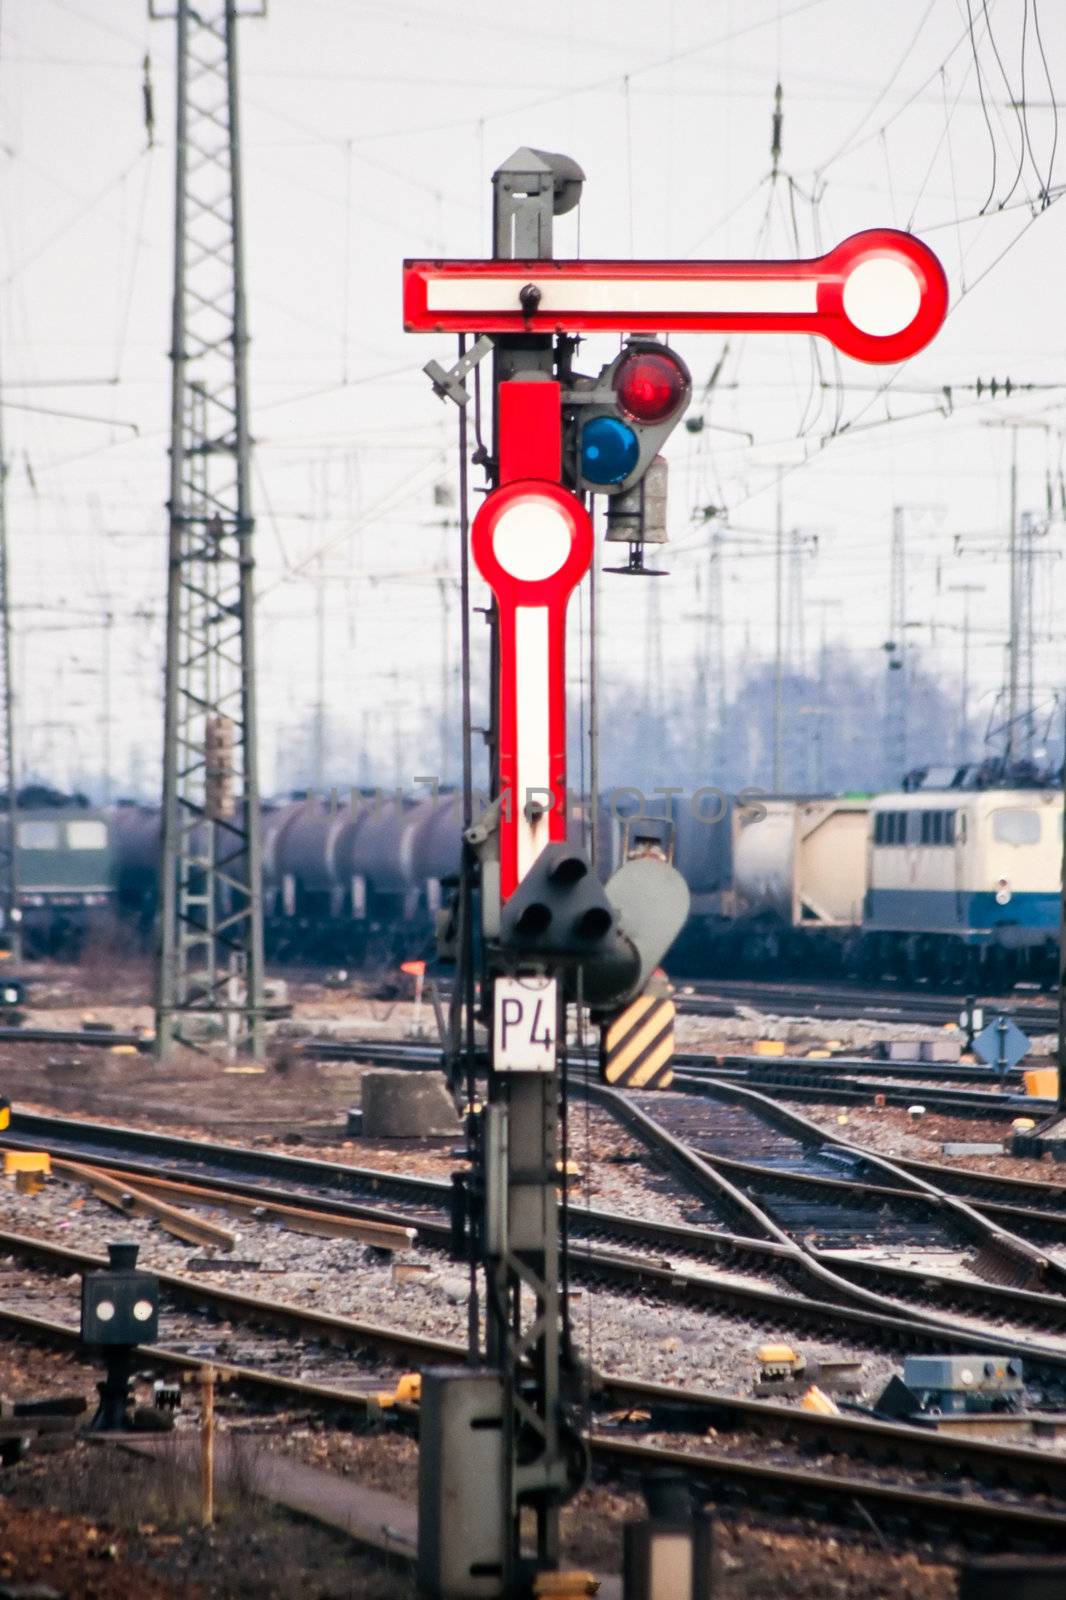 Old railway semaphore with propane signal light on cargo switching yard..